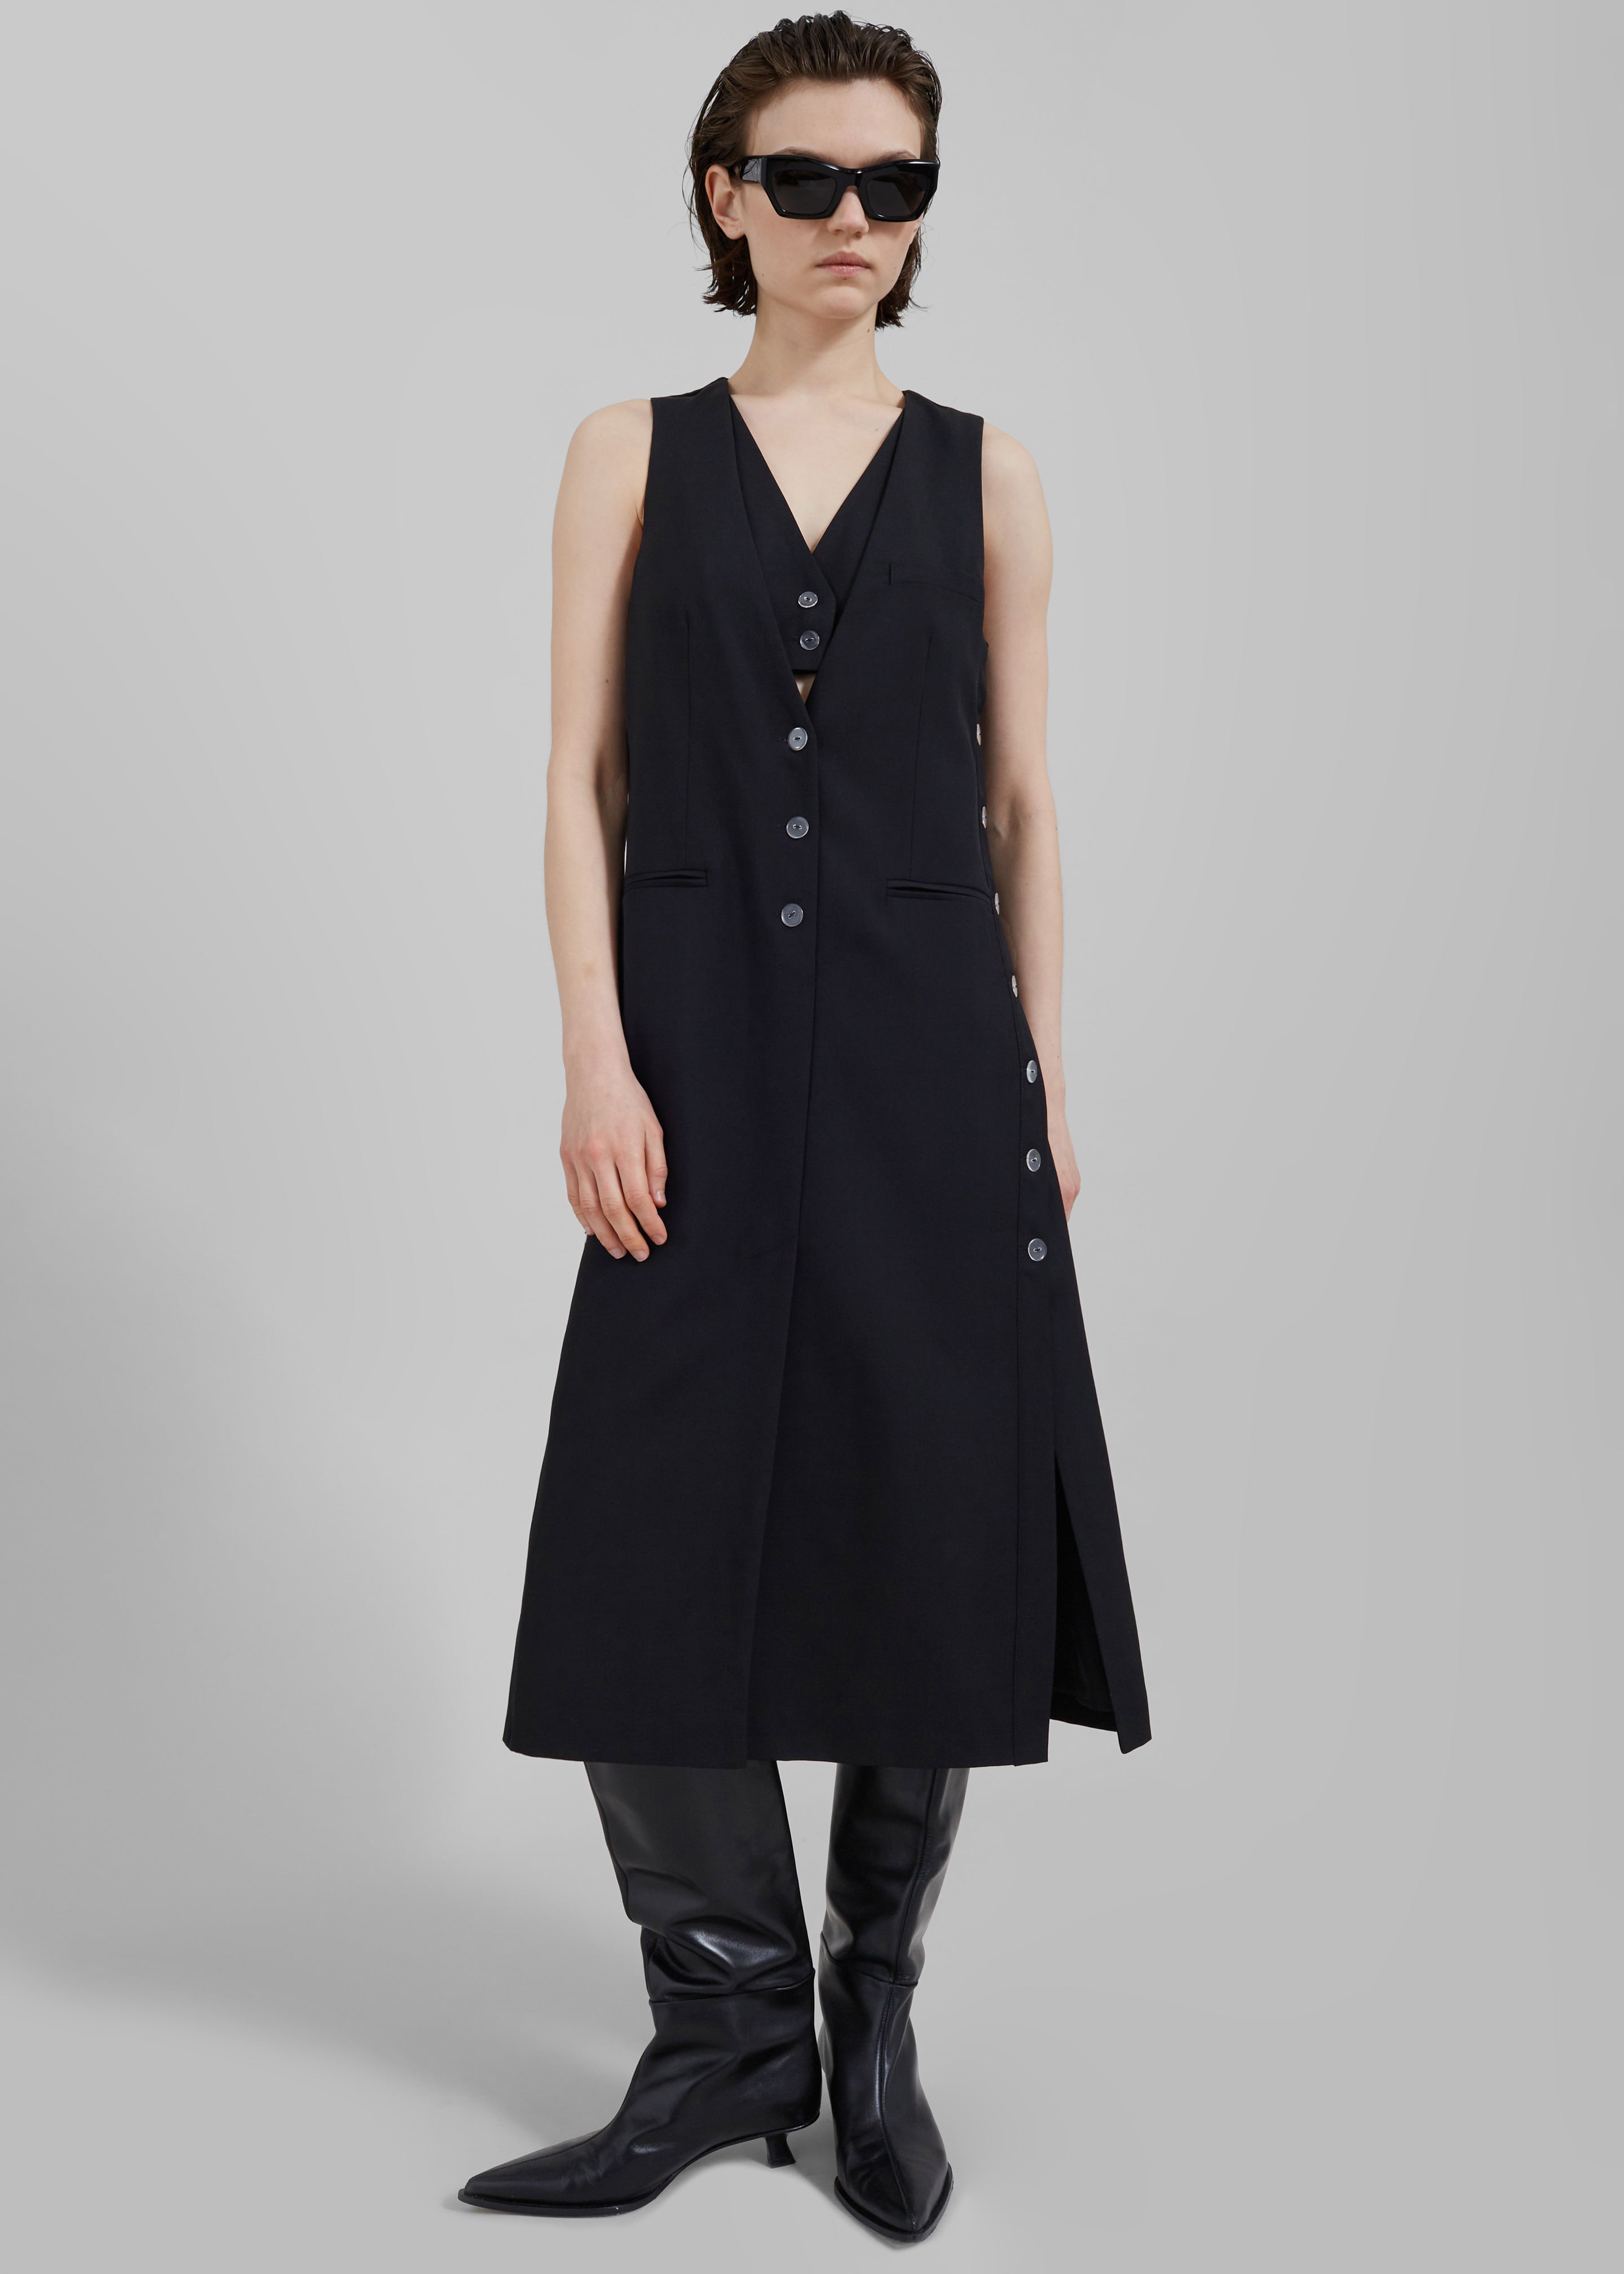 3.1 Phillip Lim Tailored Vest Dress with Set-In Bra - Black - 3